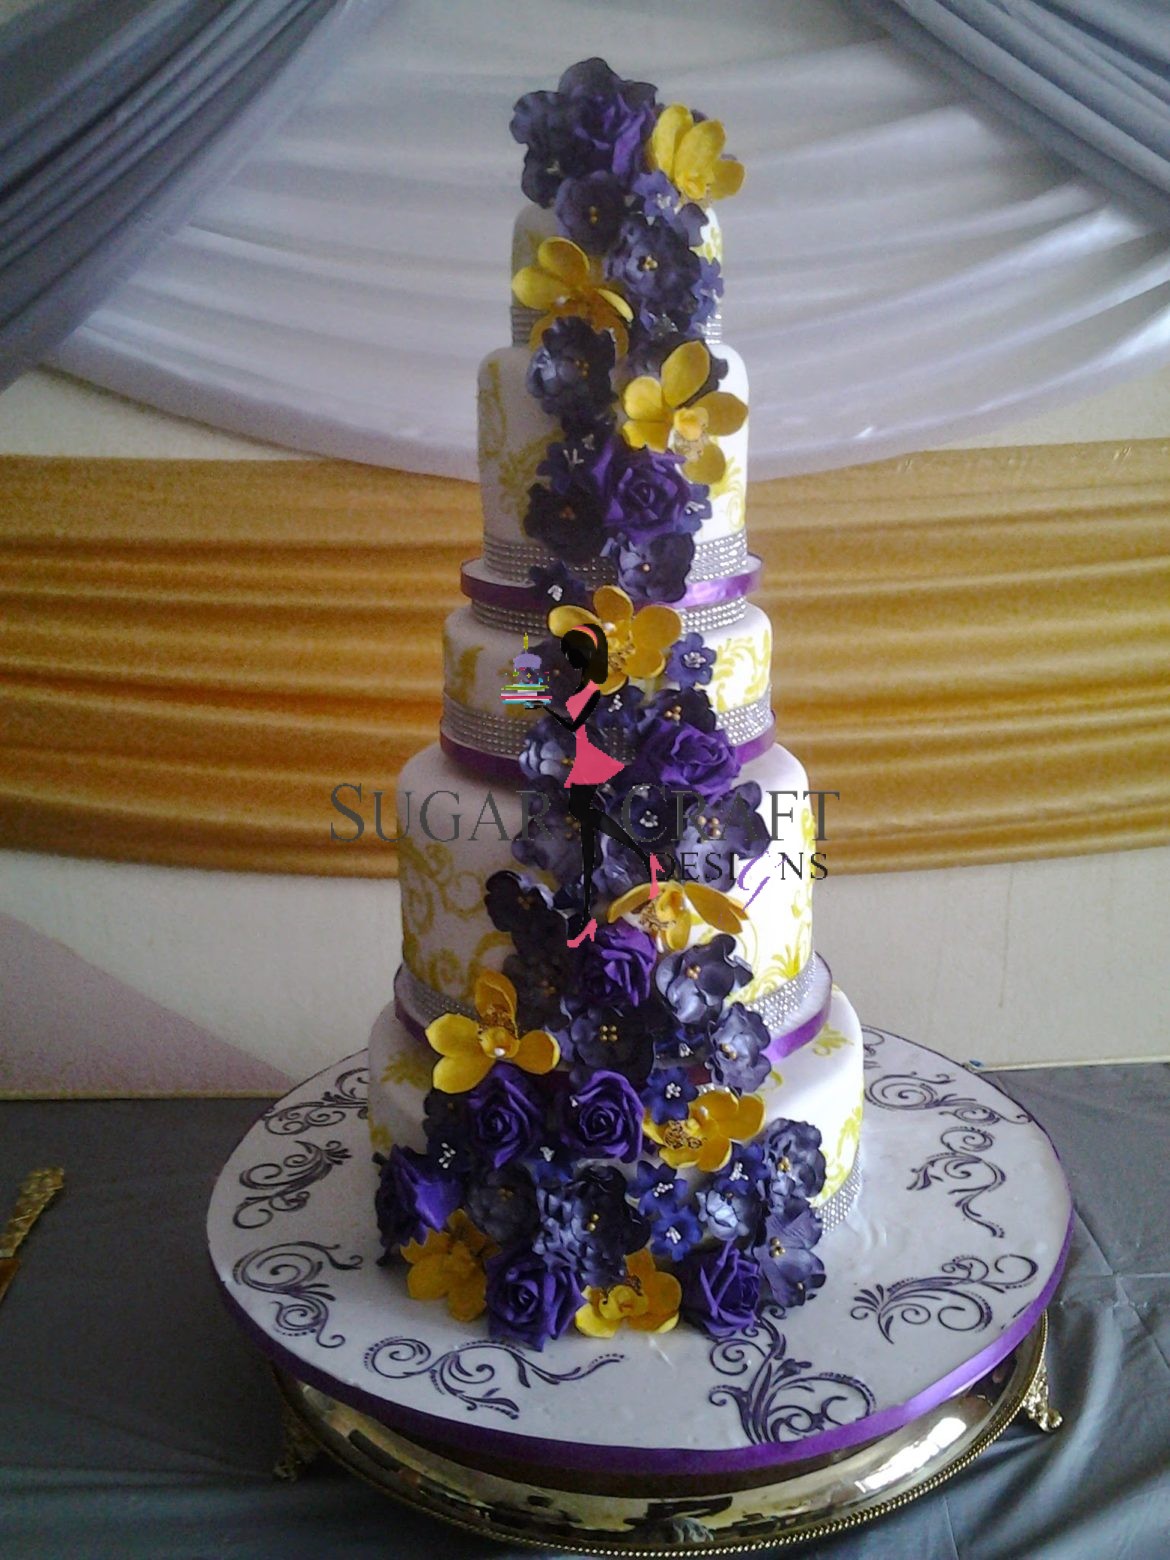 Teal-and-Yellow-5-tier-wedding-cake.jpg